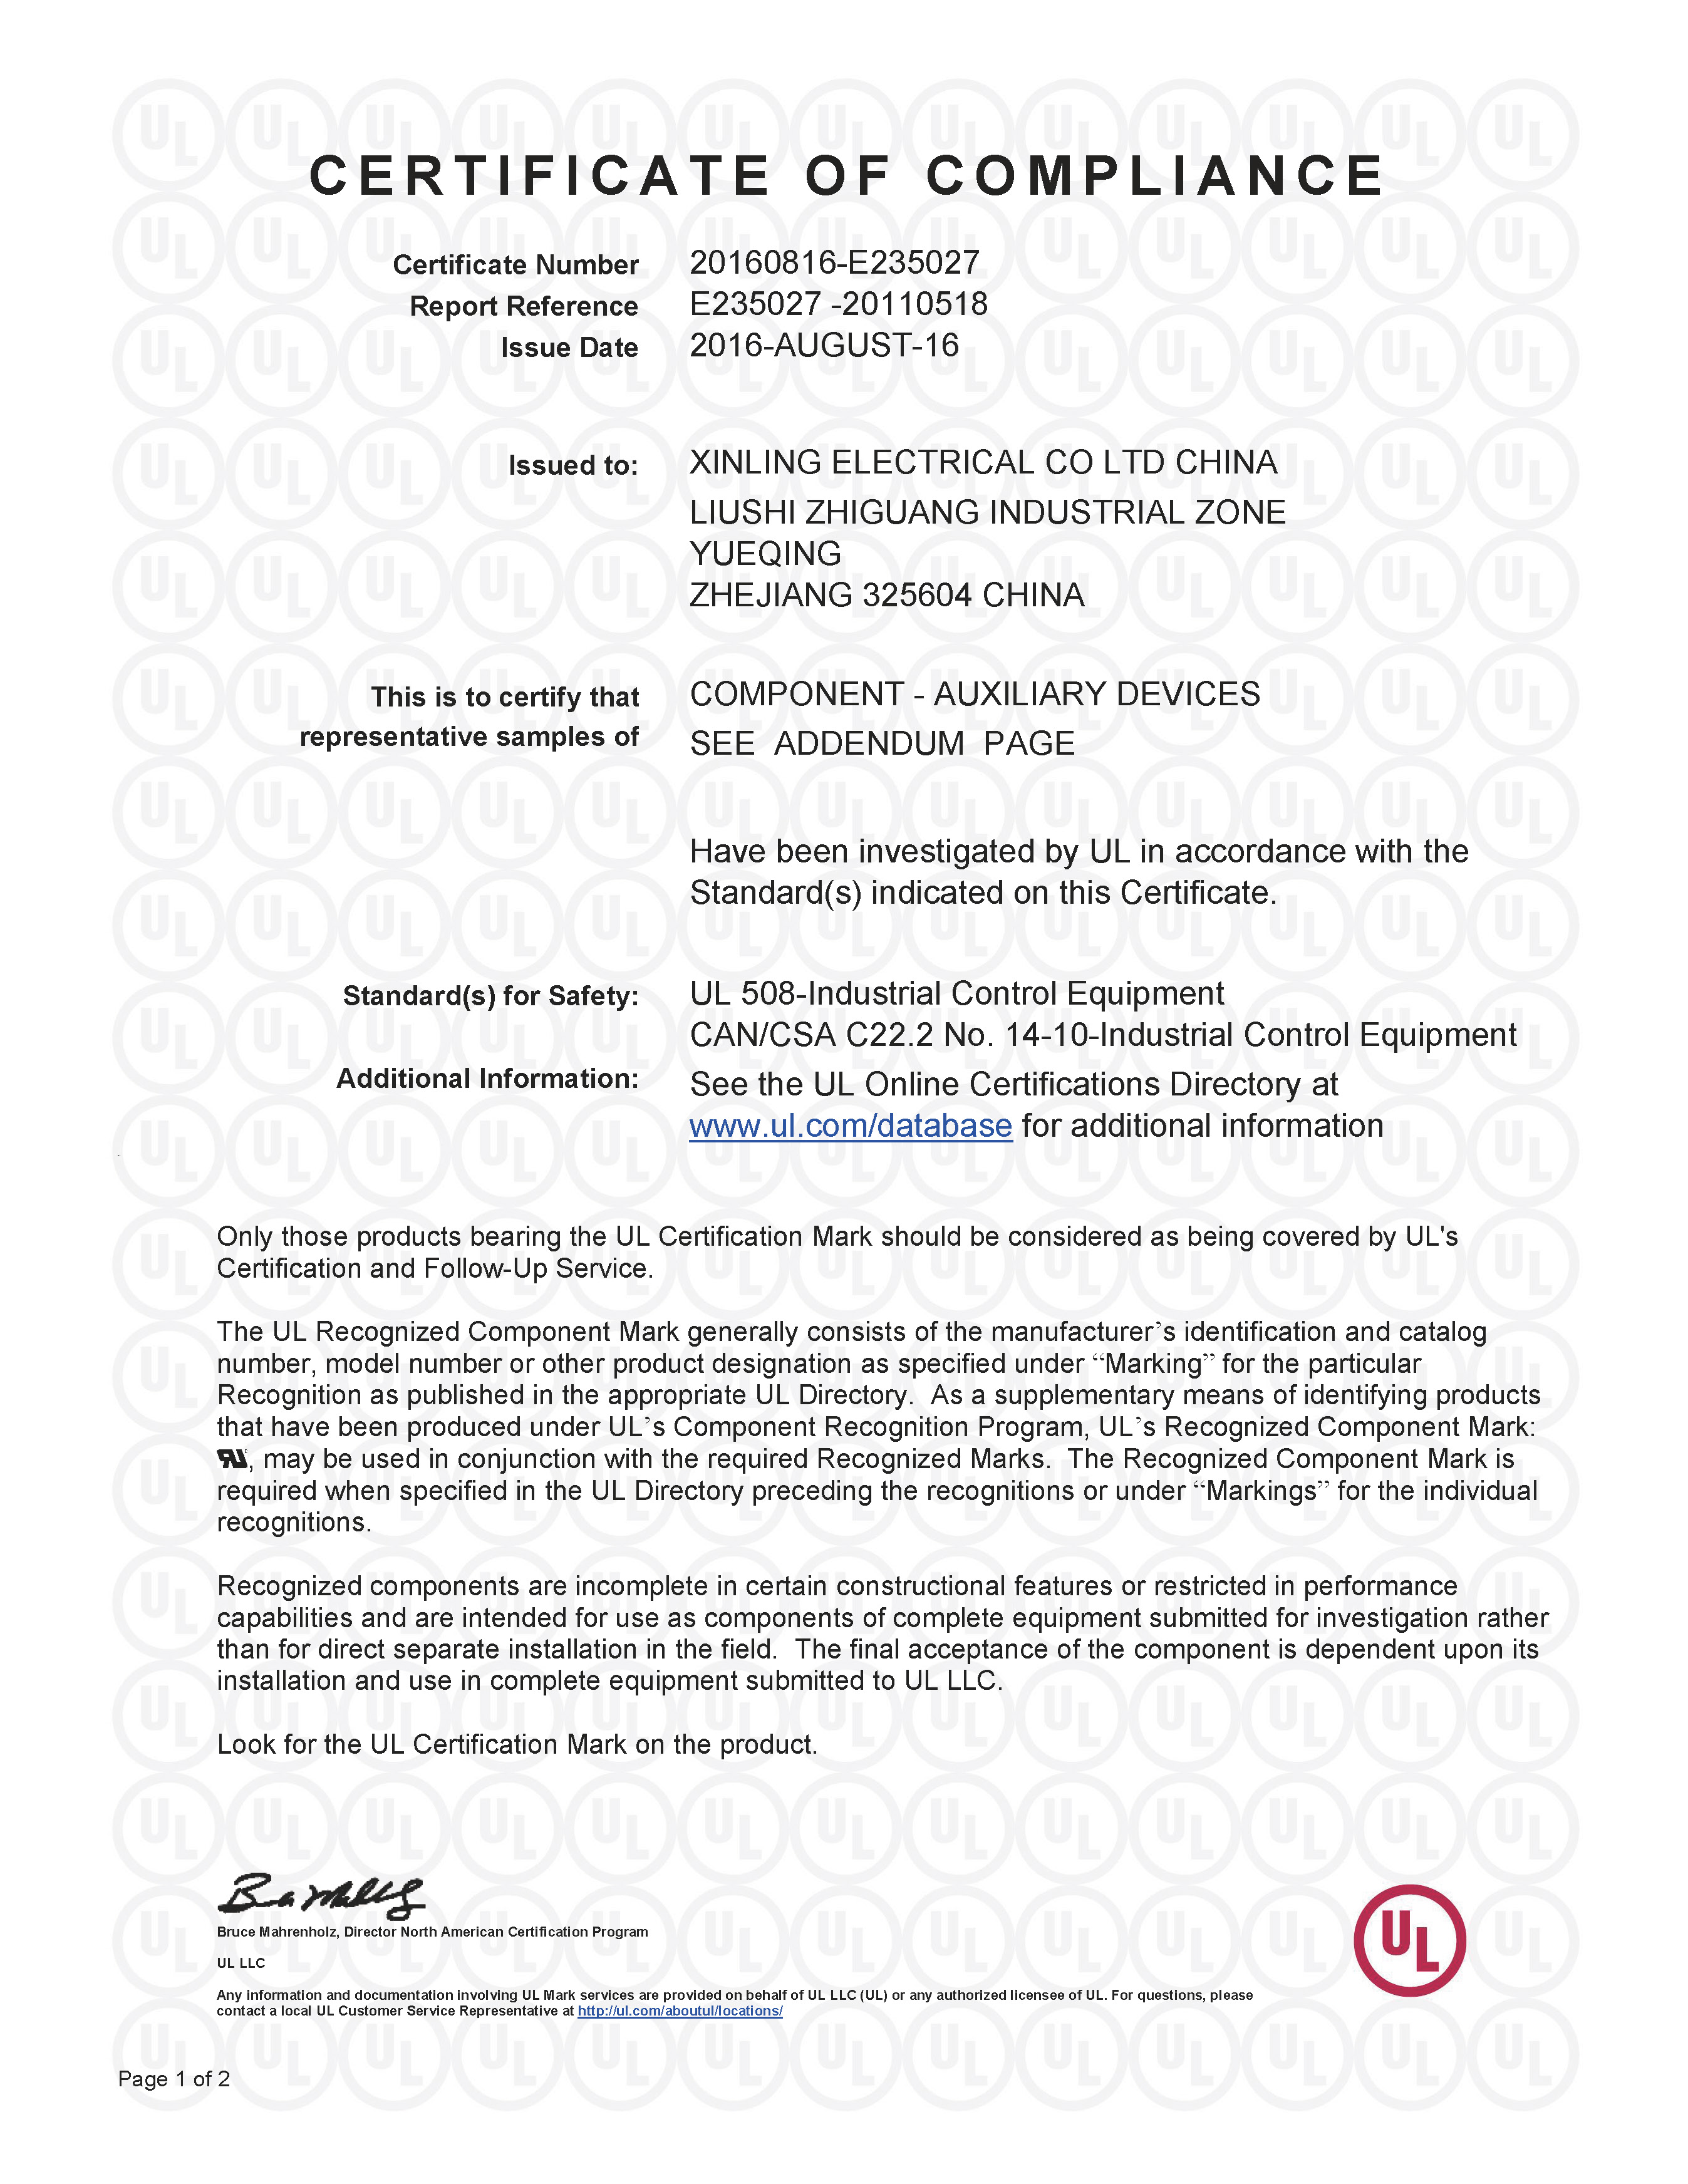 E235027-20110518-CertificateofCompliance_页面_1